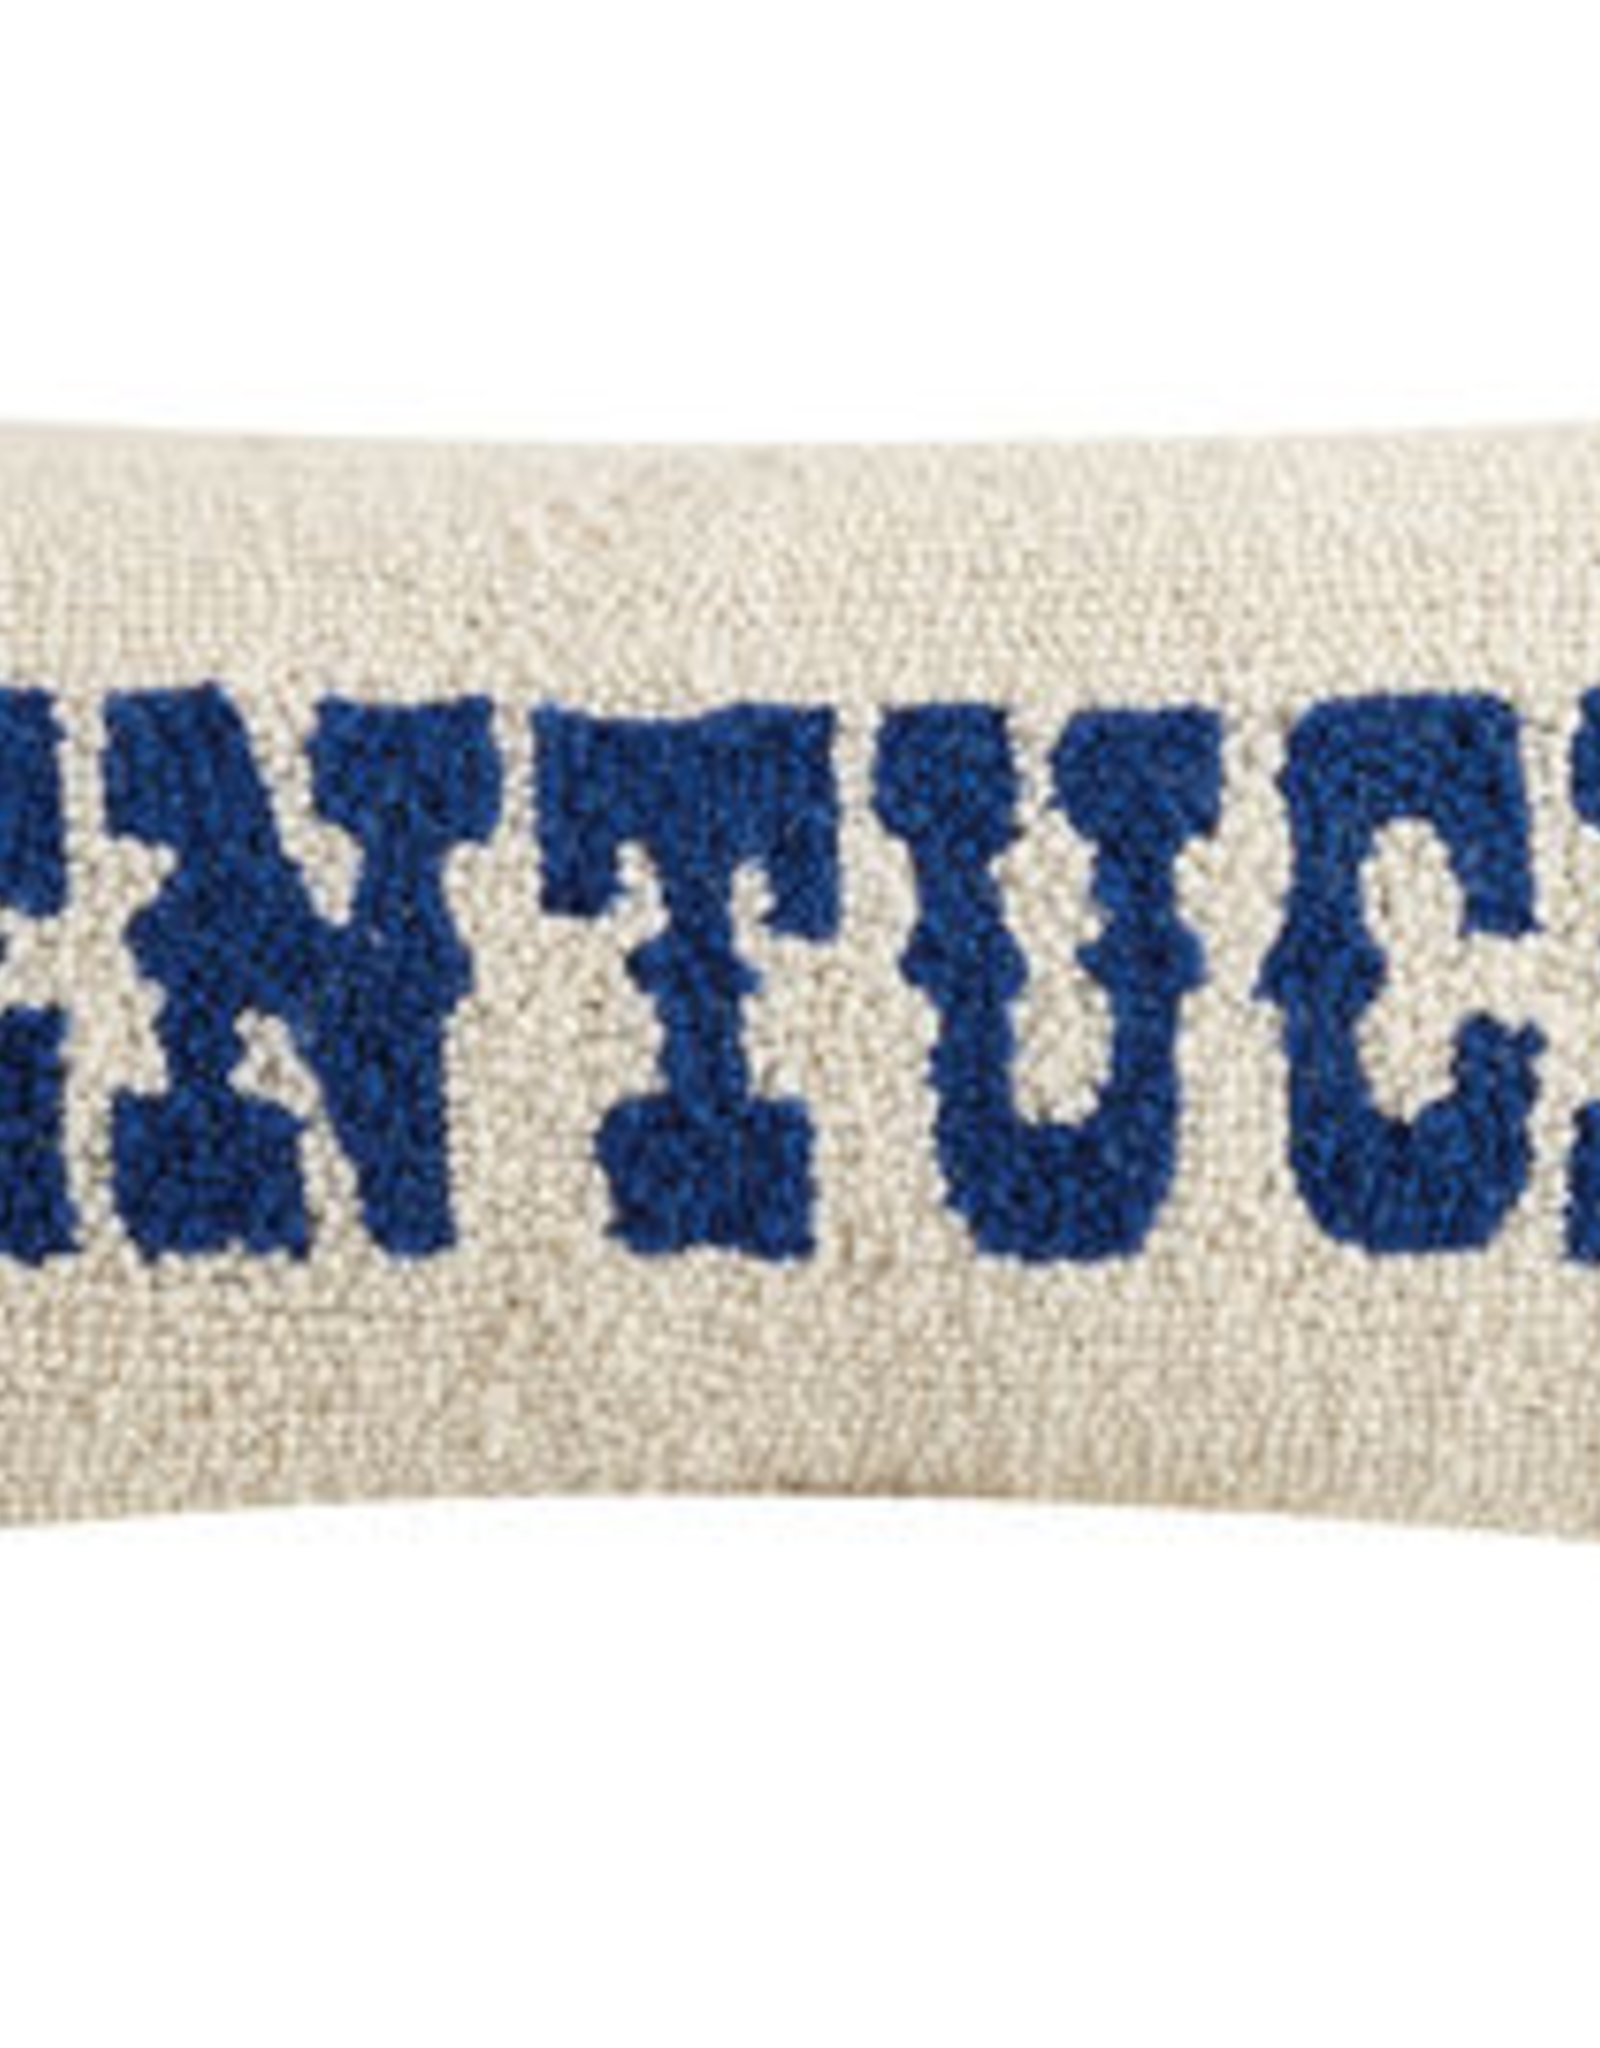 Beautiful Kentucky Hook Pillow - 8x 20. PERFECT FOR YOUR HOME! - European  Splendor®